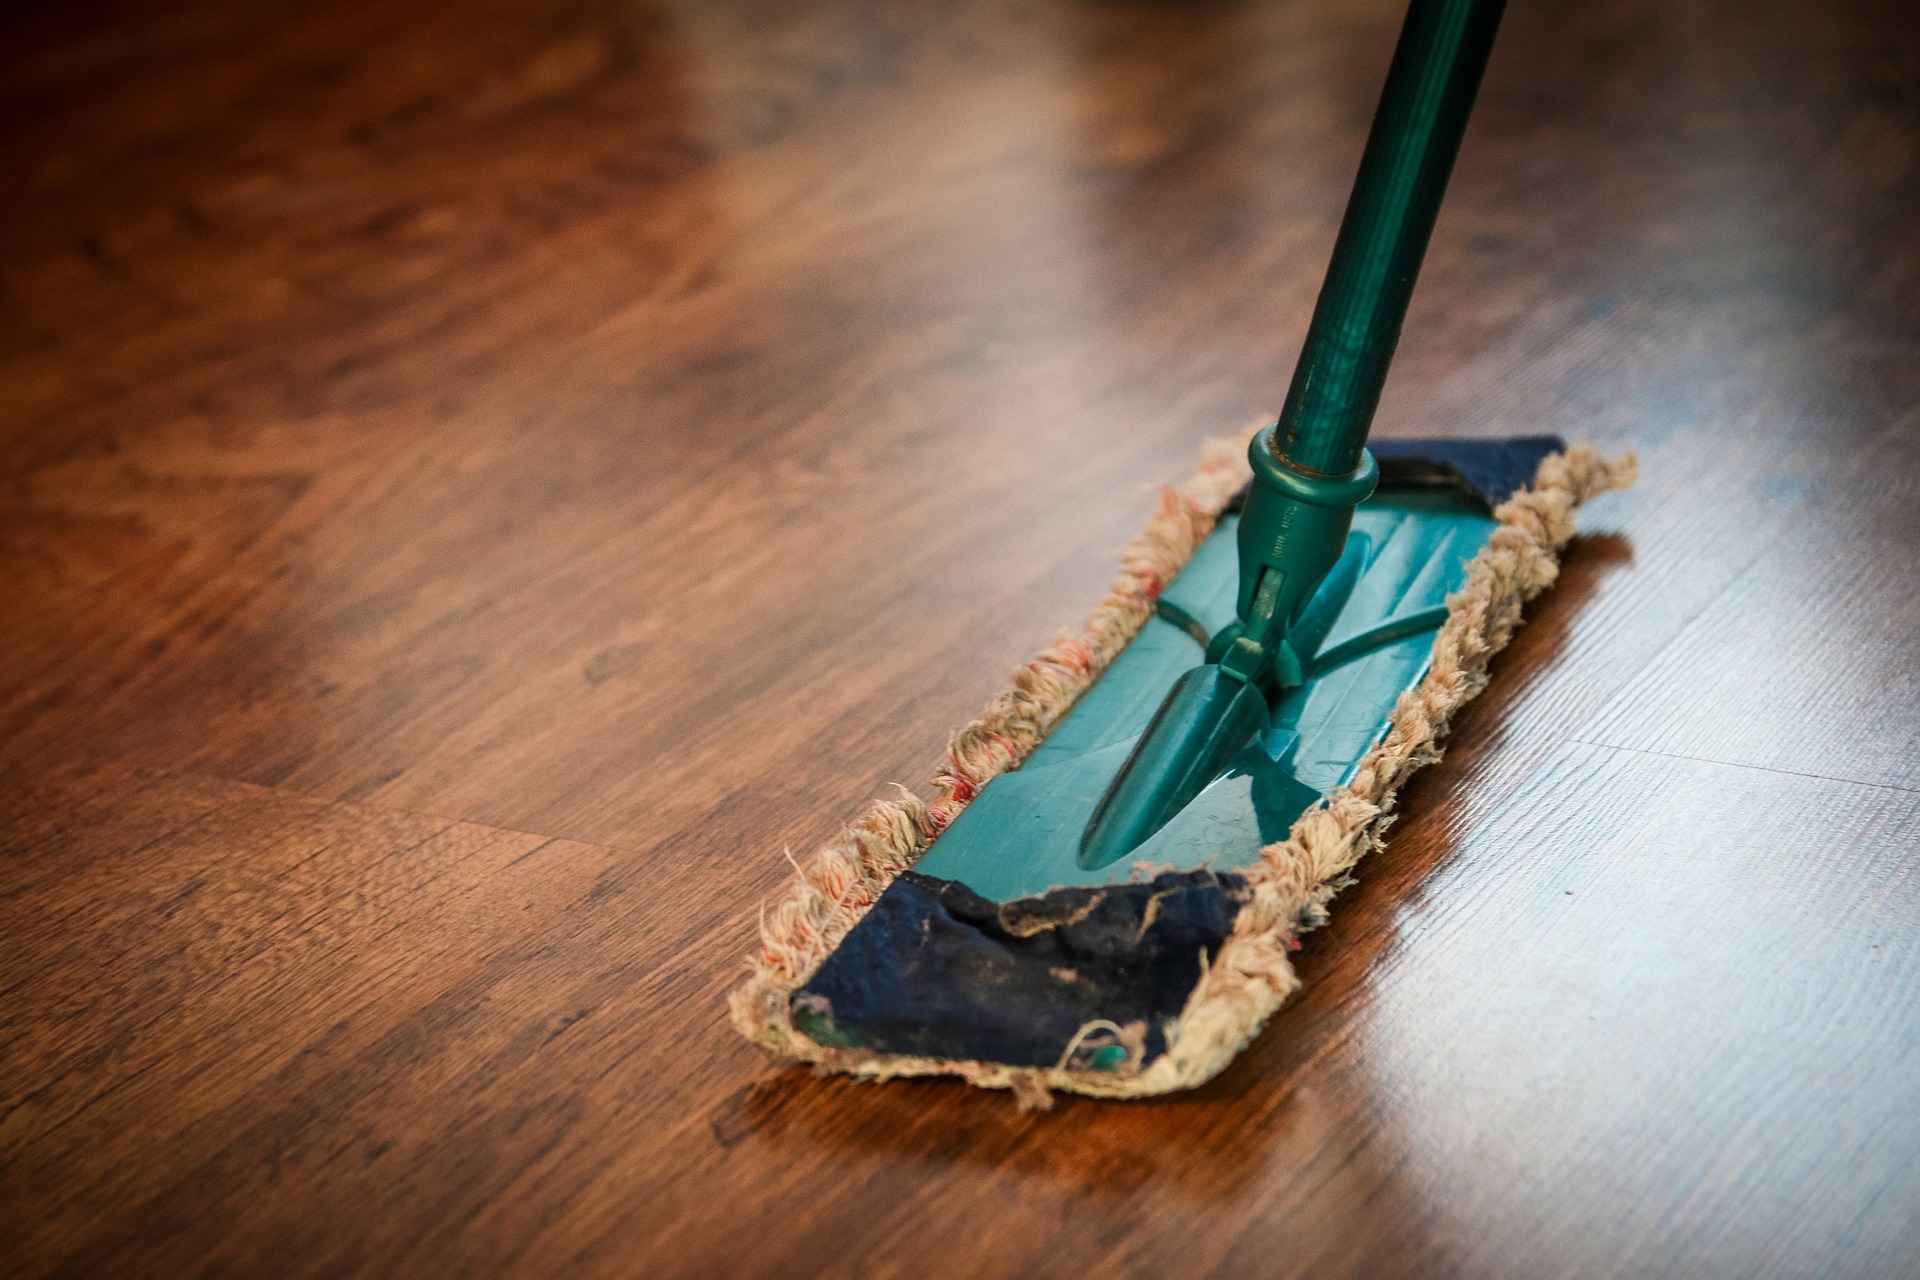 A green mop on a hardwood floor